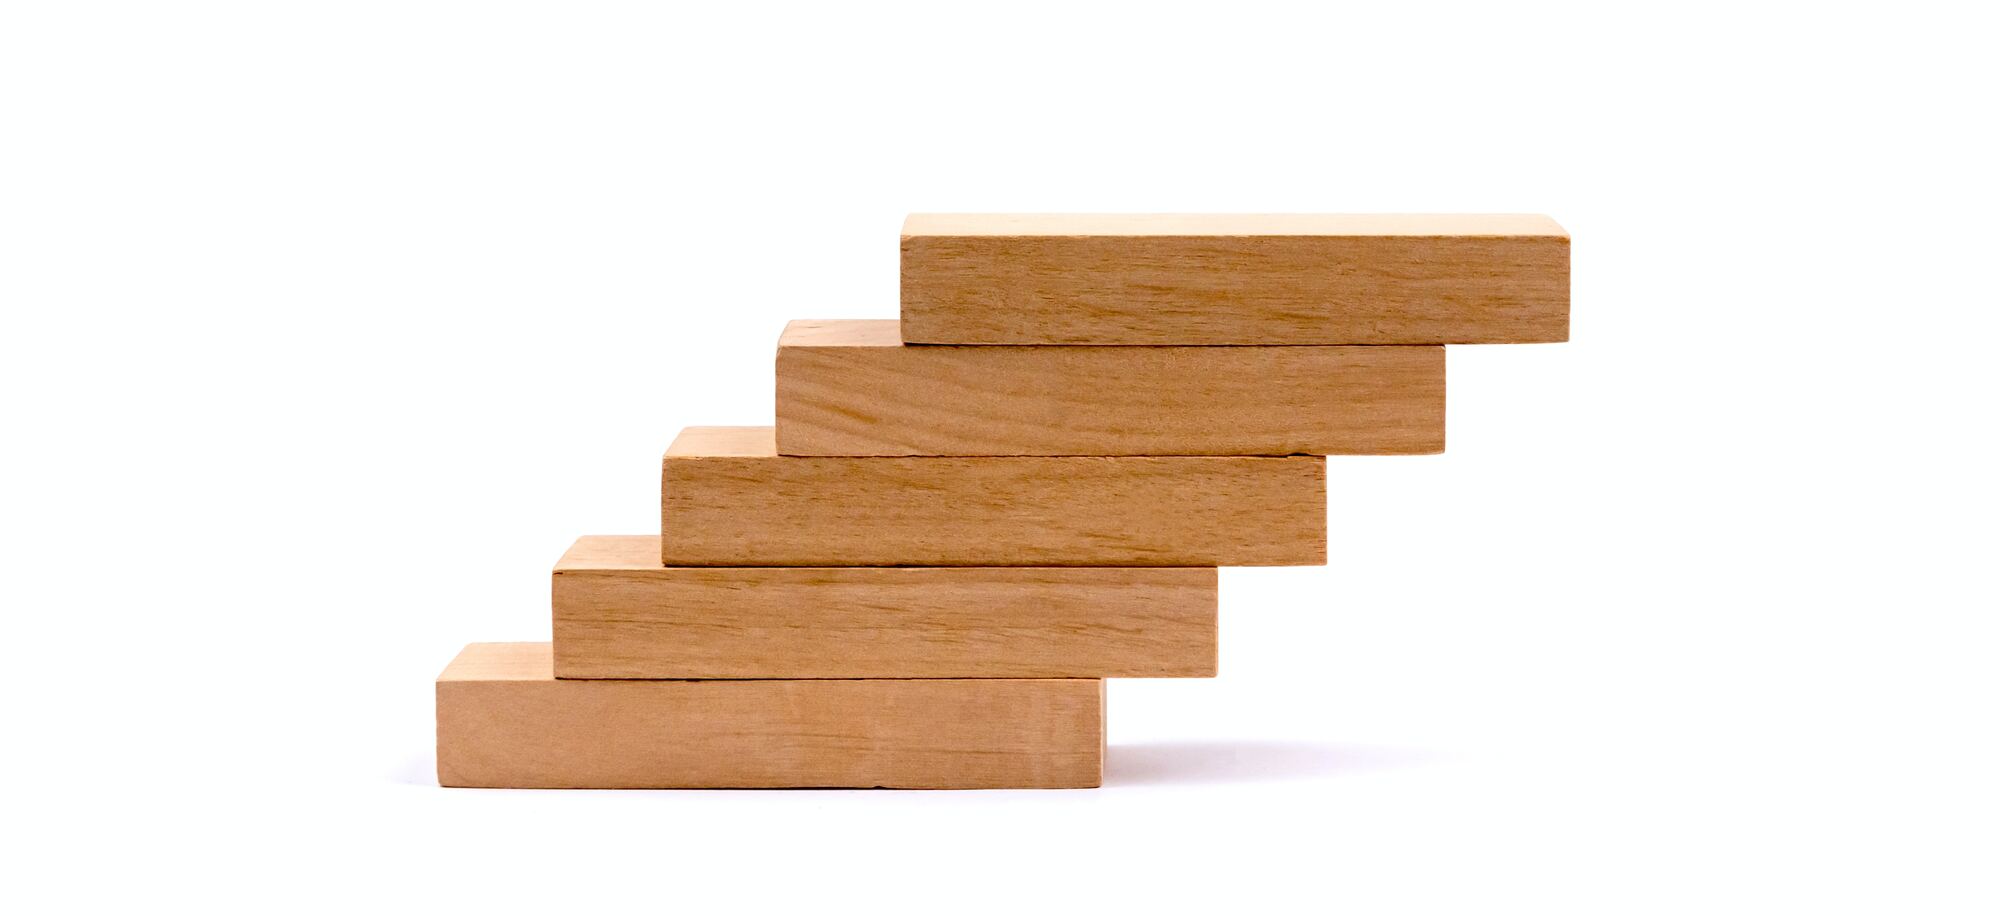 Gantt chart in wooden blocks